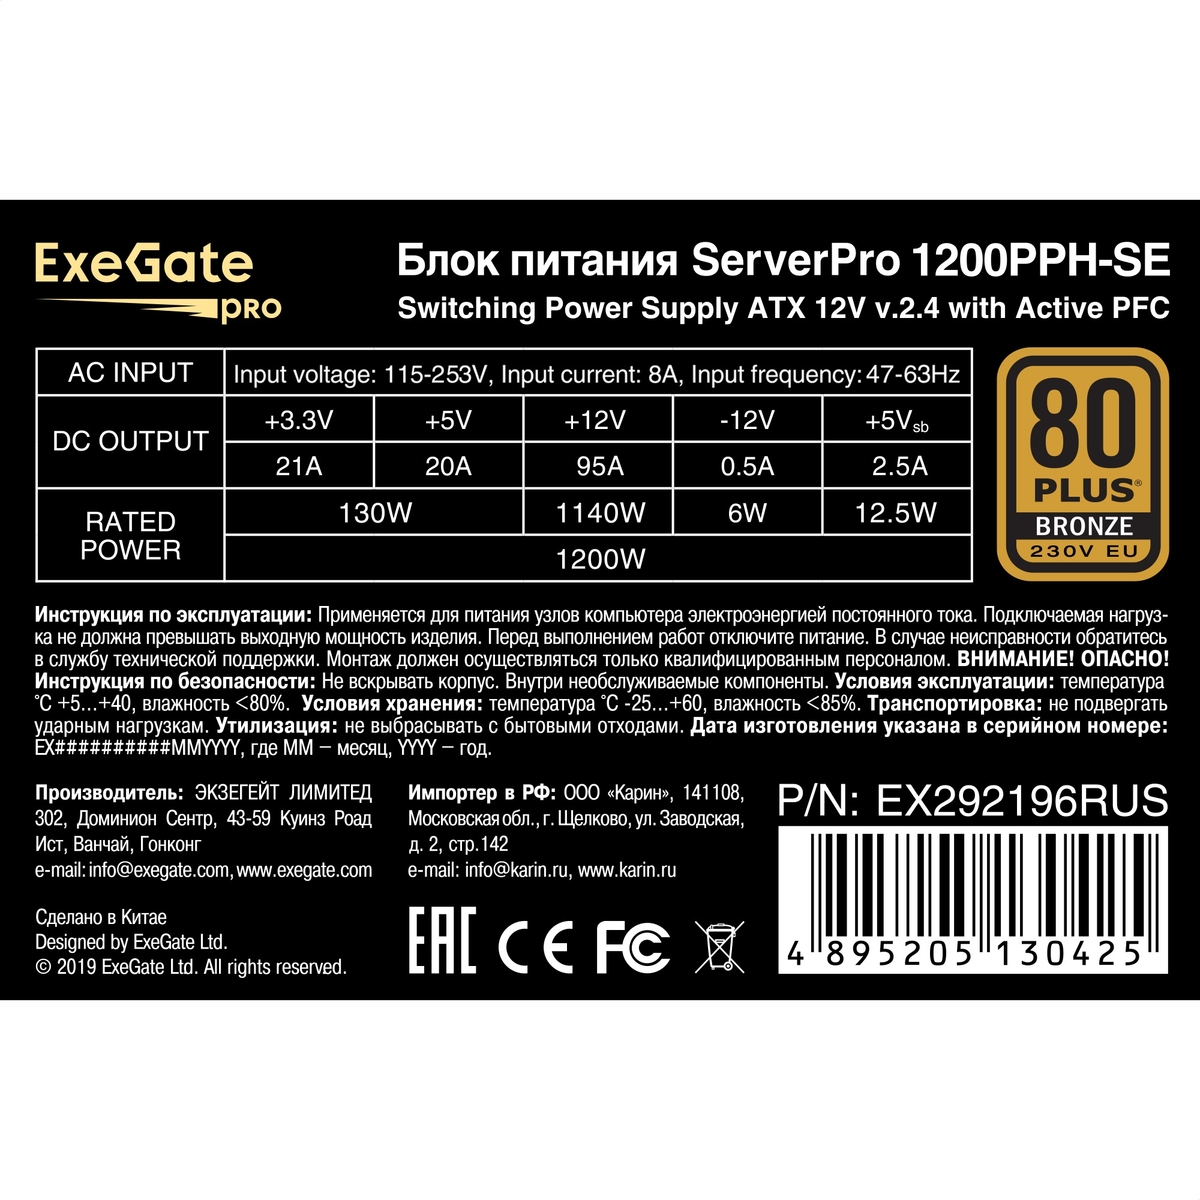 Серверный БП 1200W ExeGate ServerPRO 80 PLUS<sup>®</sup> Bronze 1200PPH-SE